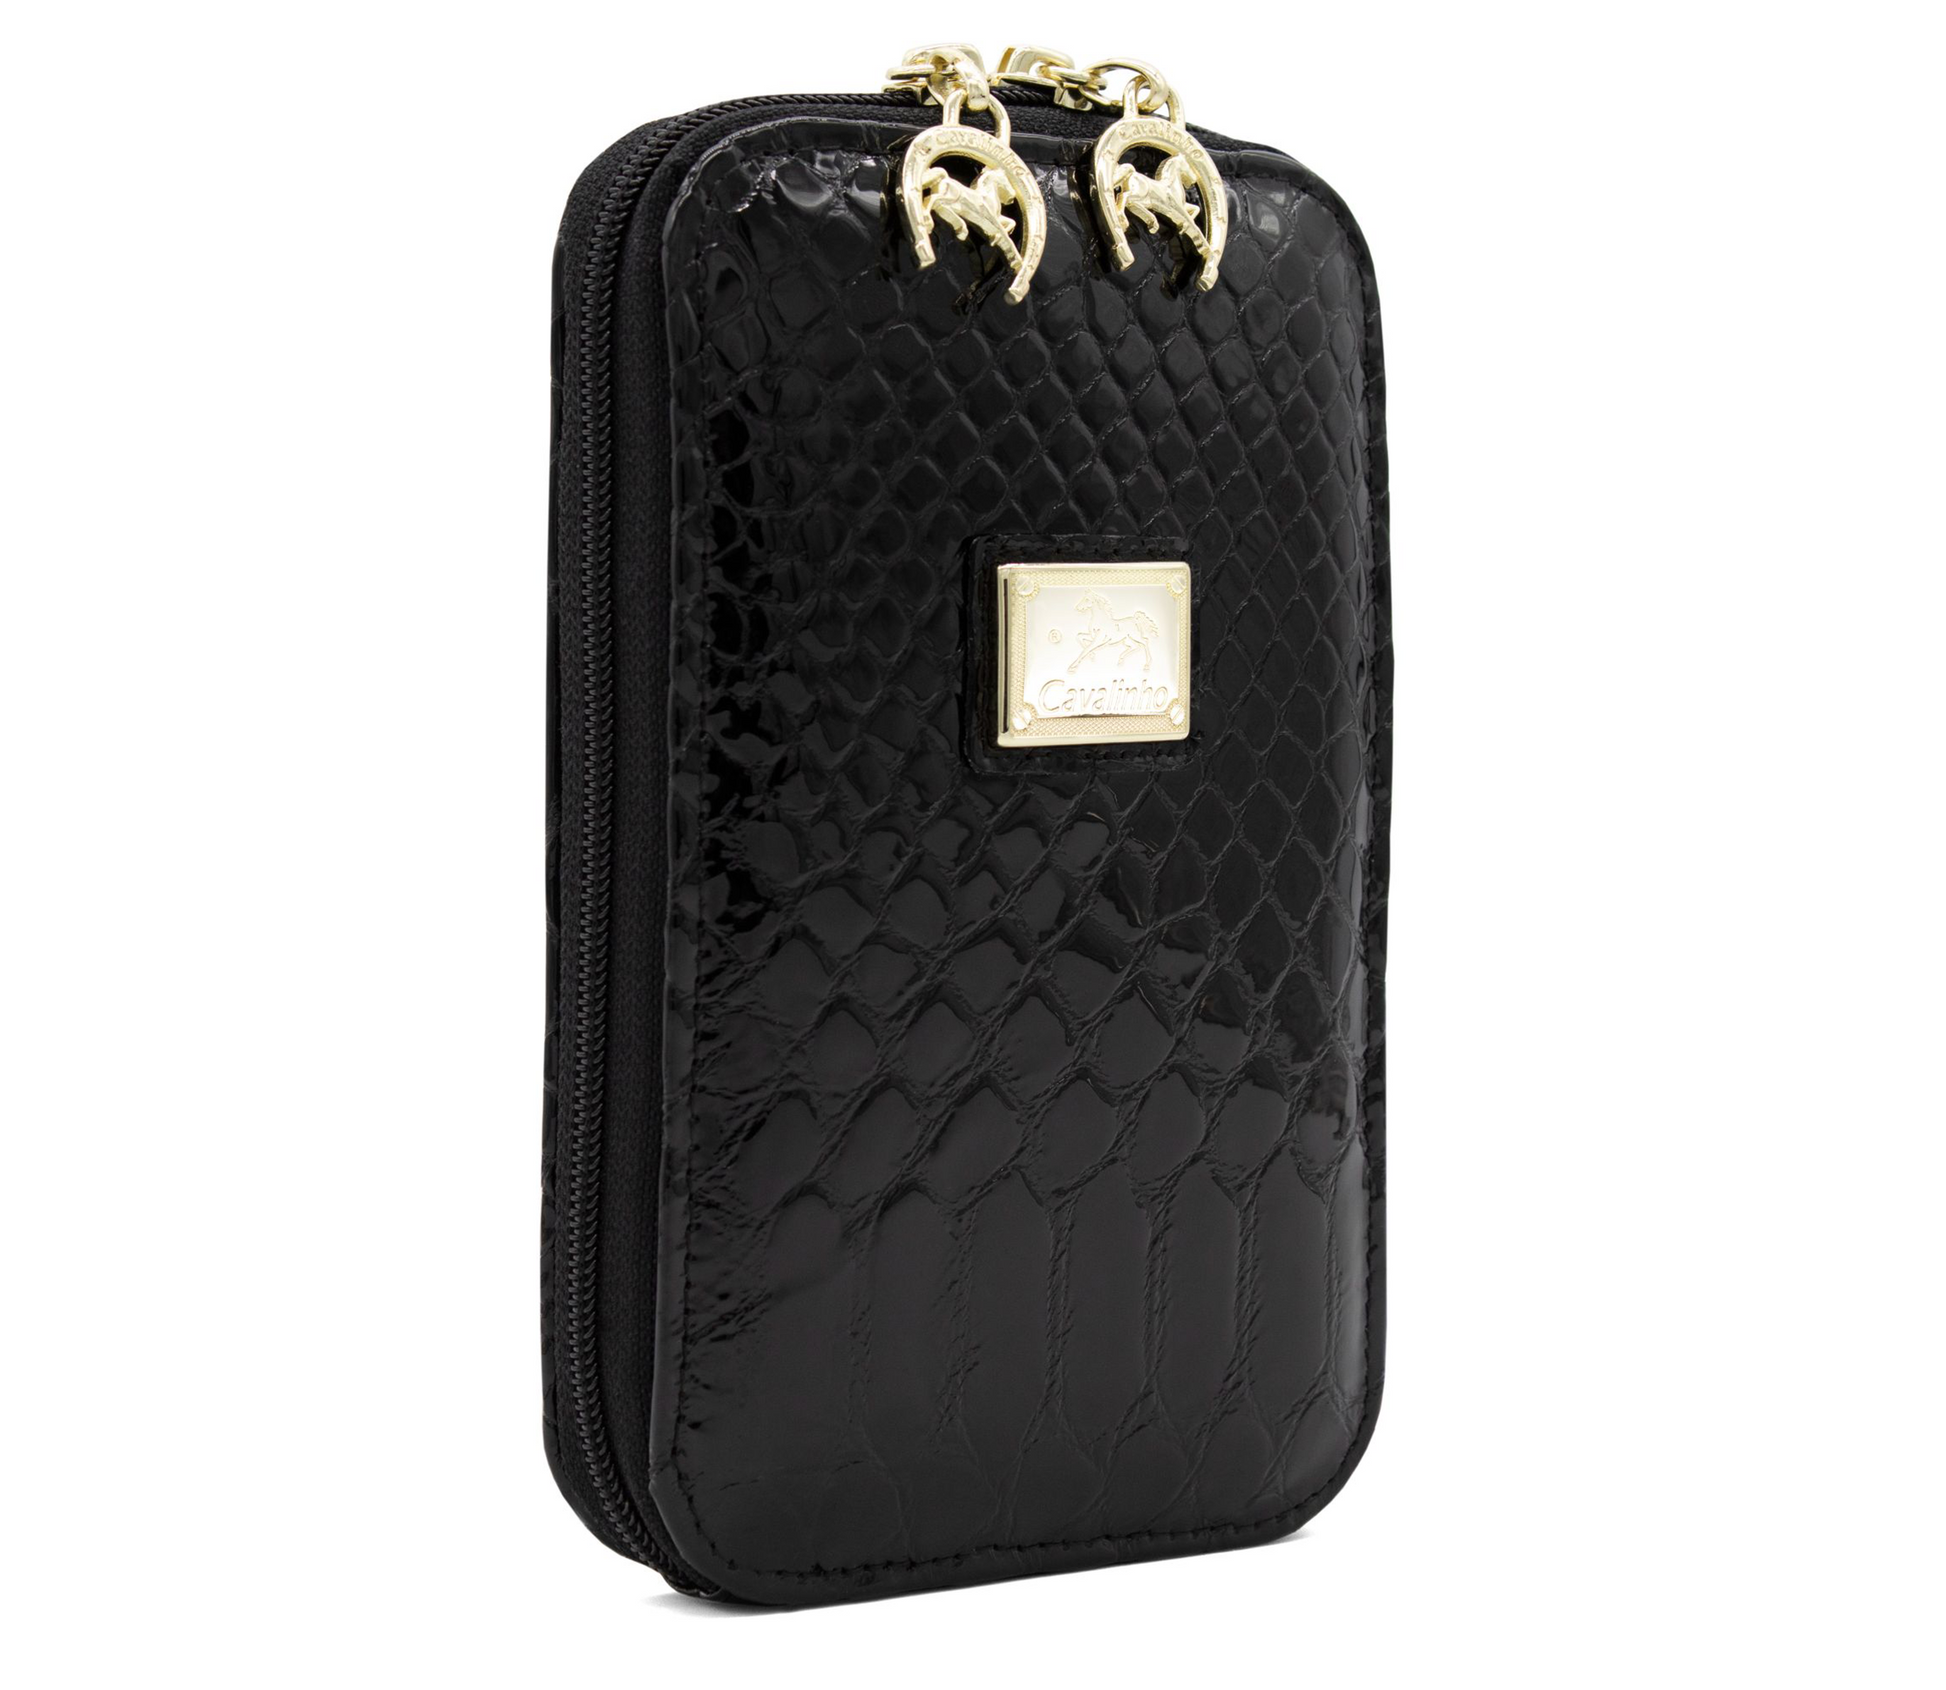 Cavalinho Gallop Patent Leather Phone Purse - Black - Artboard5